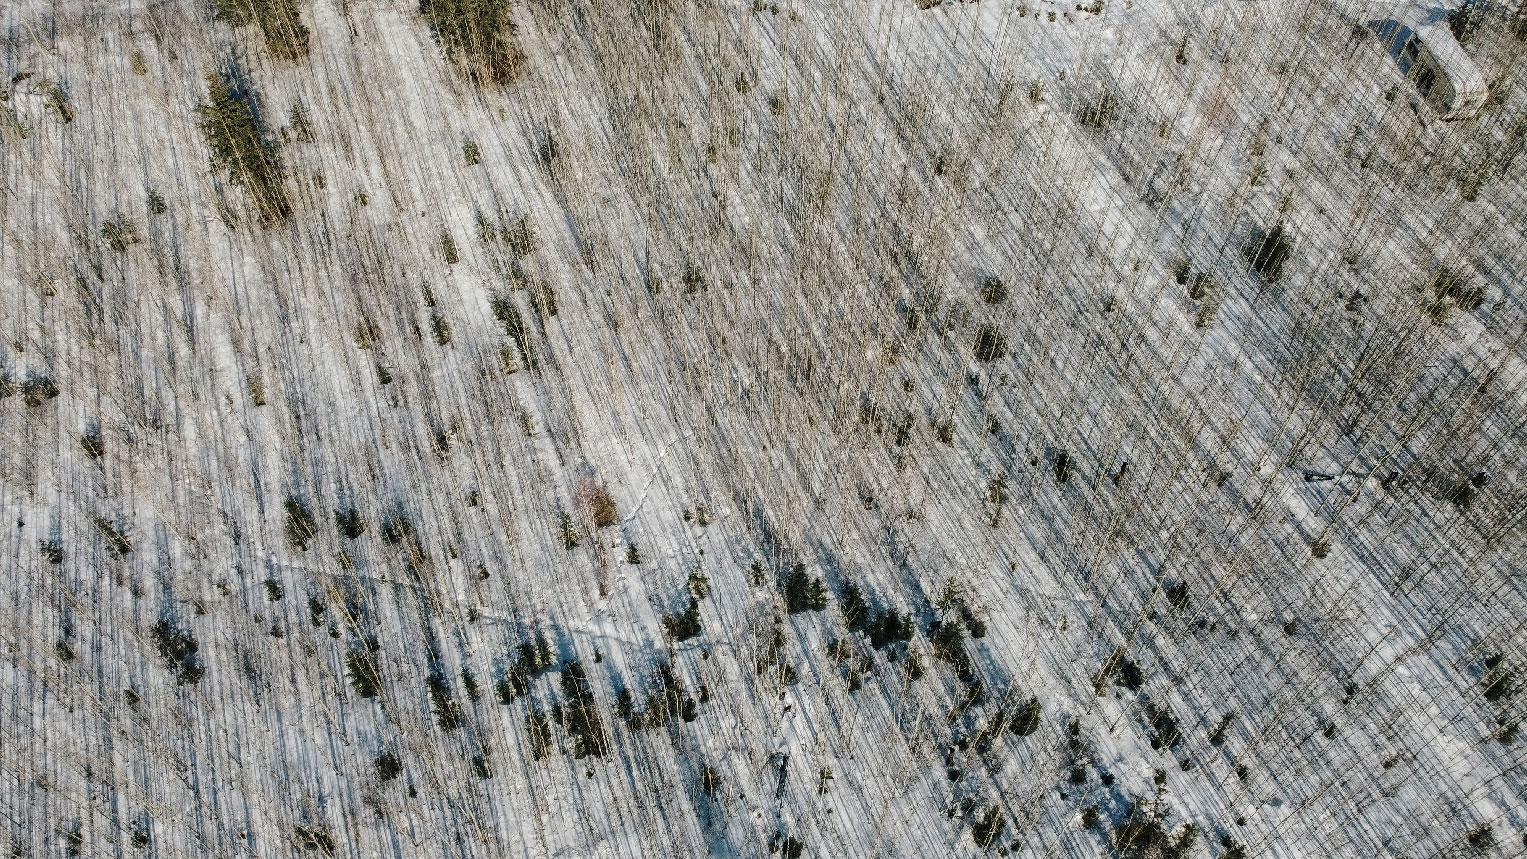 Animal tracks in the woods near Jean L'Hommecourt's cabin 13 km away from Imperial Oil's Kearl Lake oilsands mine near Fort McKay